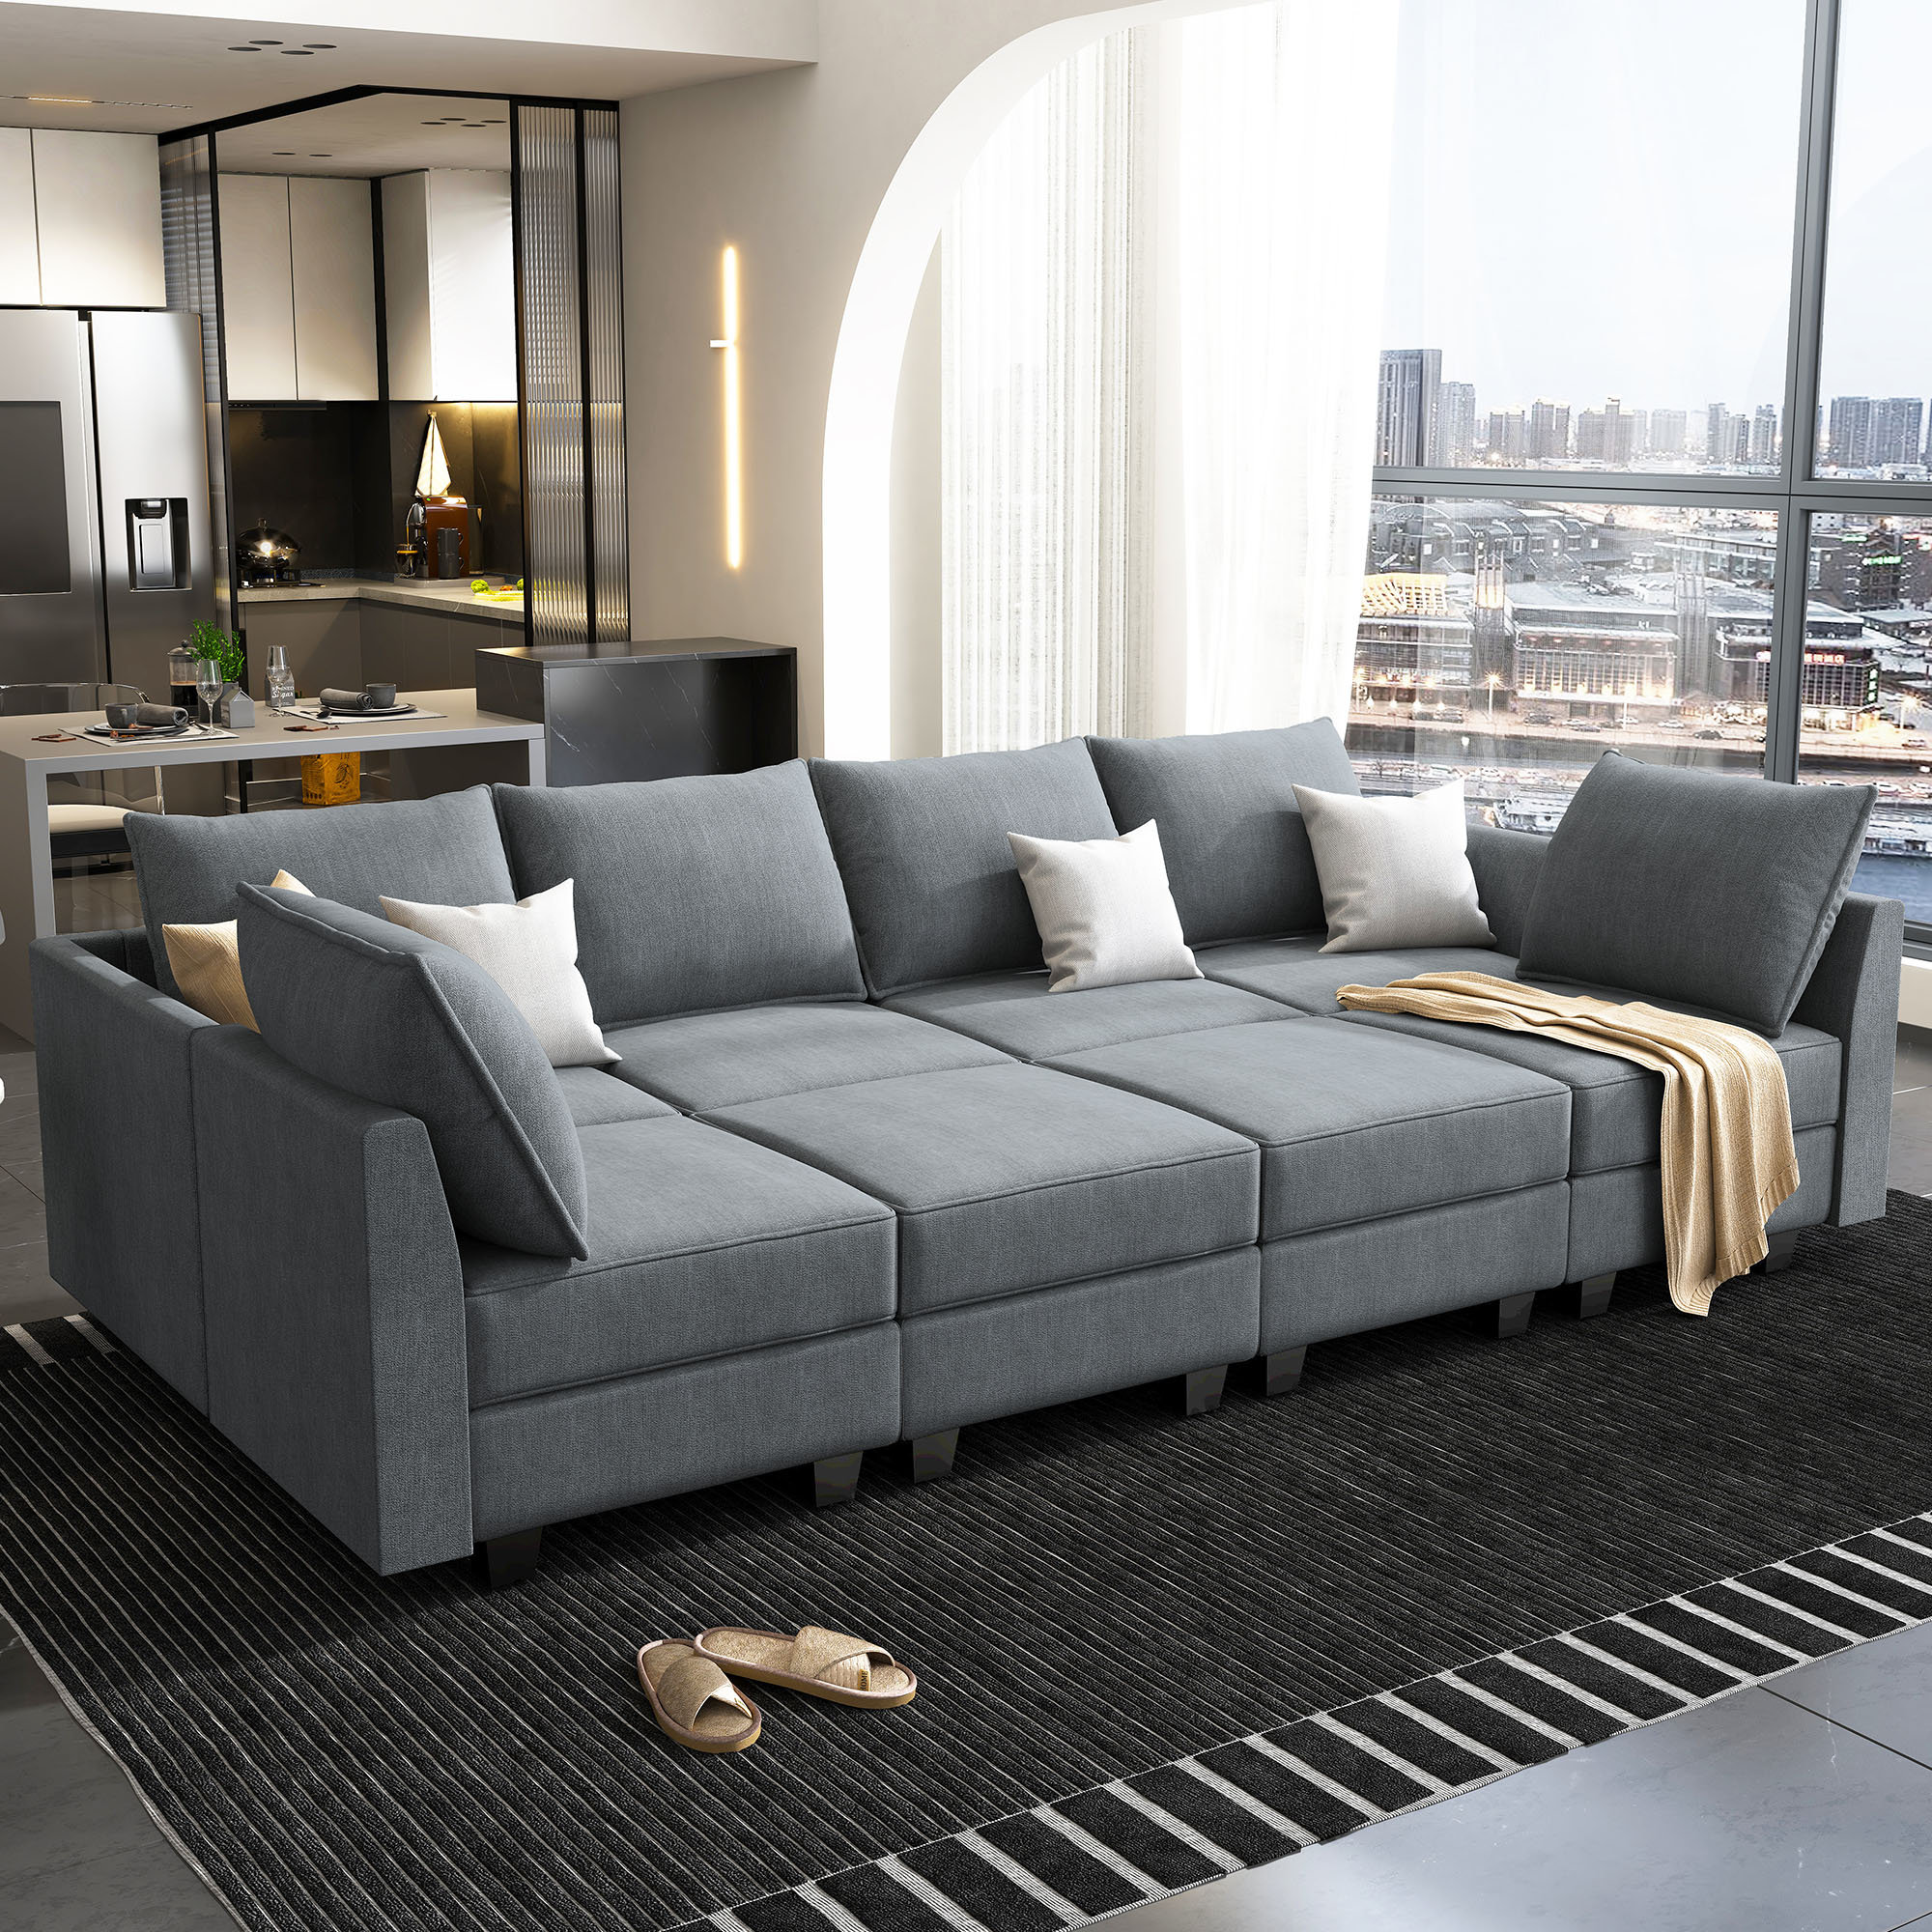 Honbay Oversized Modular Sectional Sofa Living Room Sofa Bed Modern U Shaped Sleeper Grey